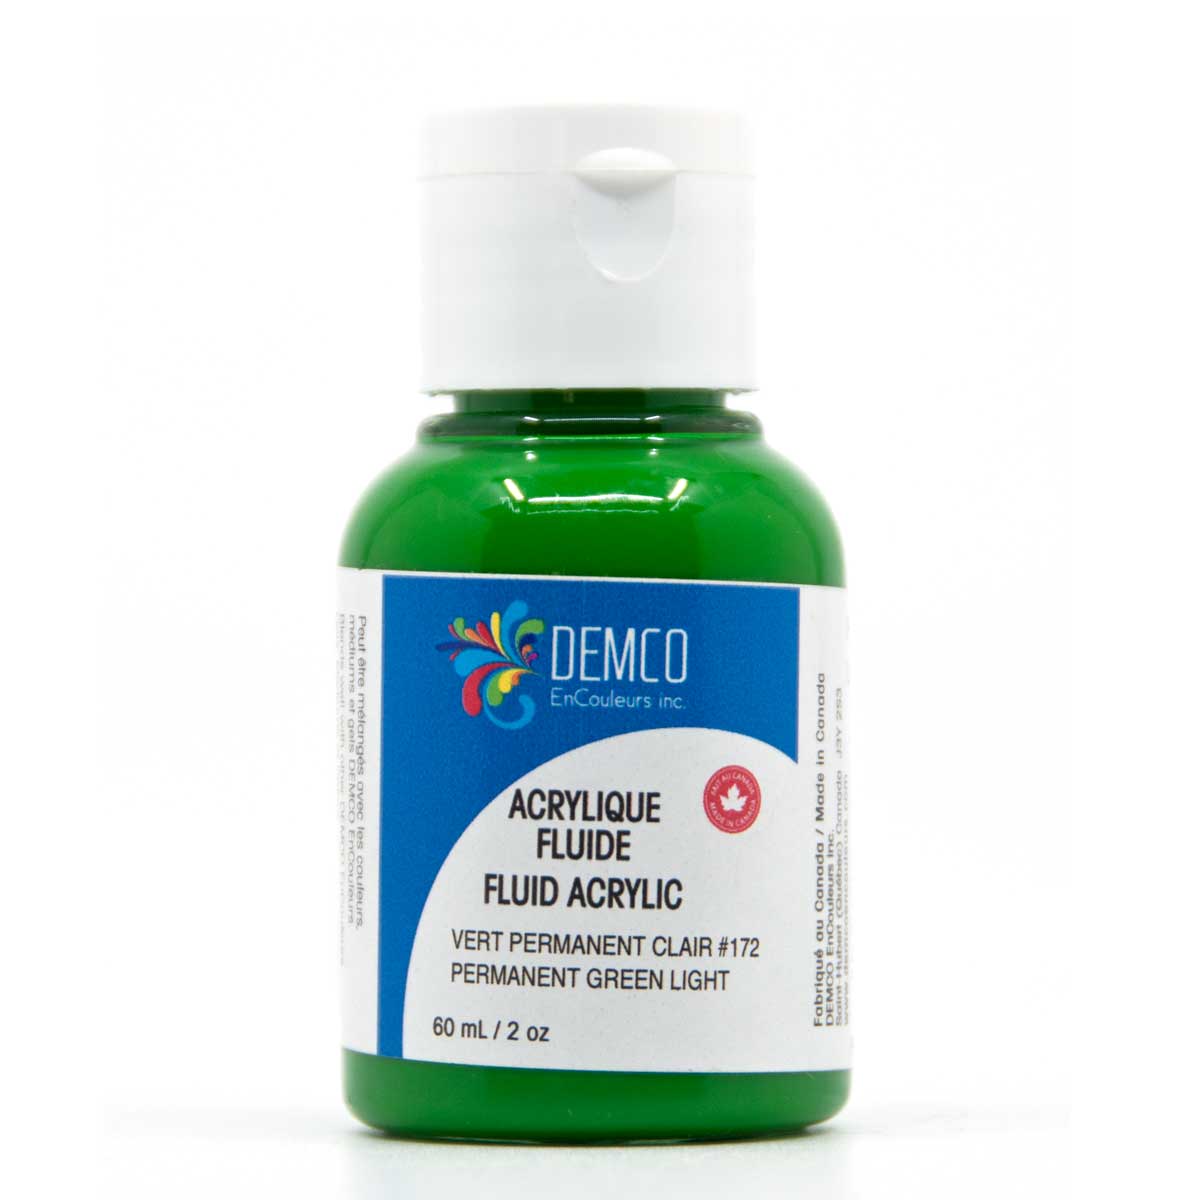 Demco Fluid Acrylic Paint - Permanent Green Light 60 ml